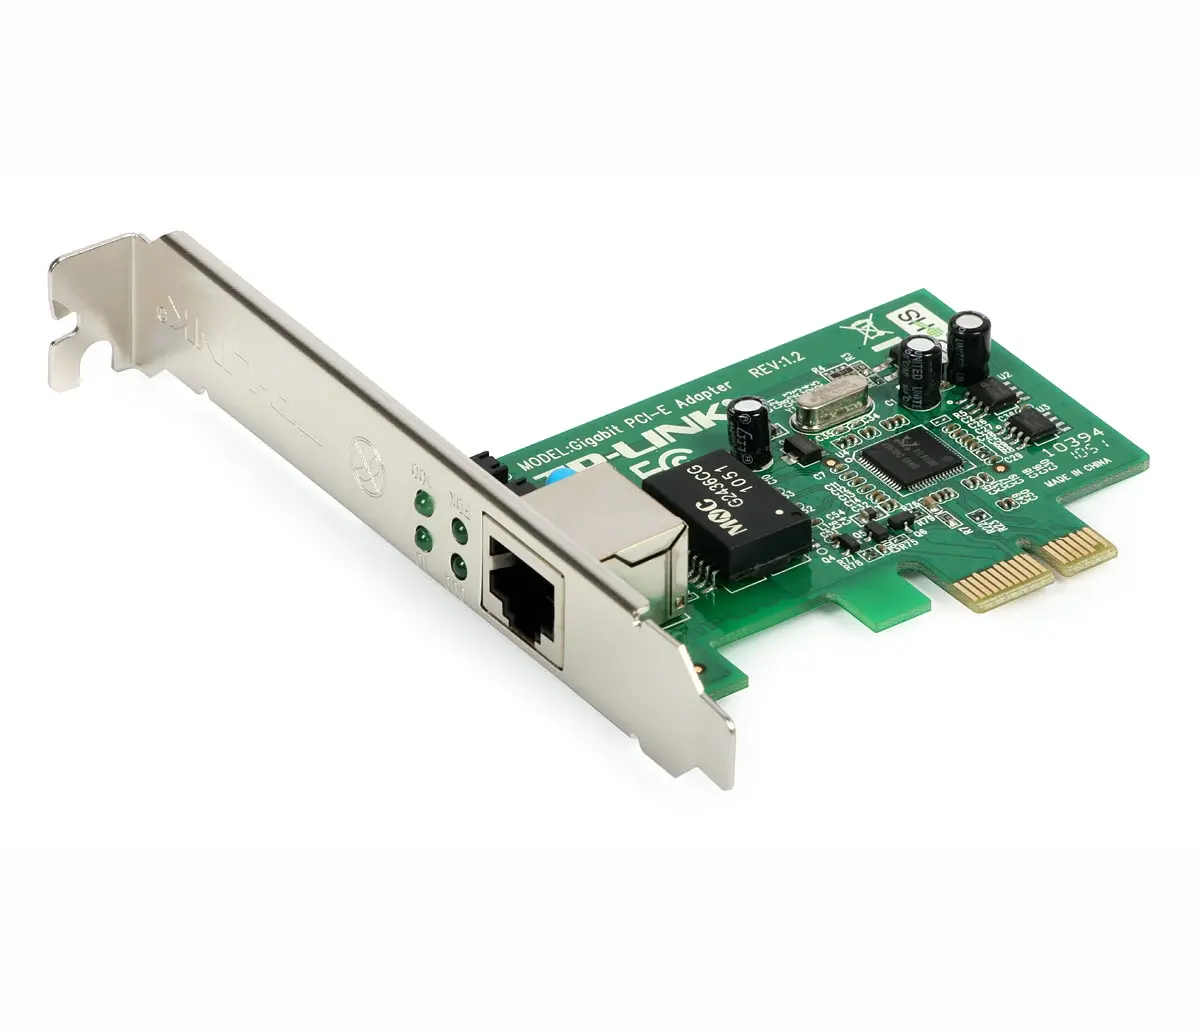 NIC TP-Link TG-3468, 32-bit Gigabit PCIe Network Adapter, Realtek RTL8168B, 10/100/1000Mbps RJ45 port, Auto MDI/MDIX - image 1